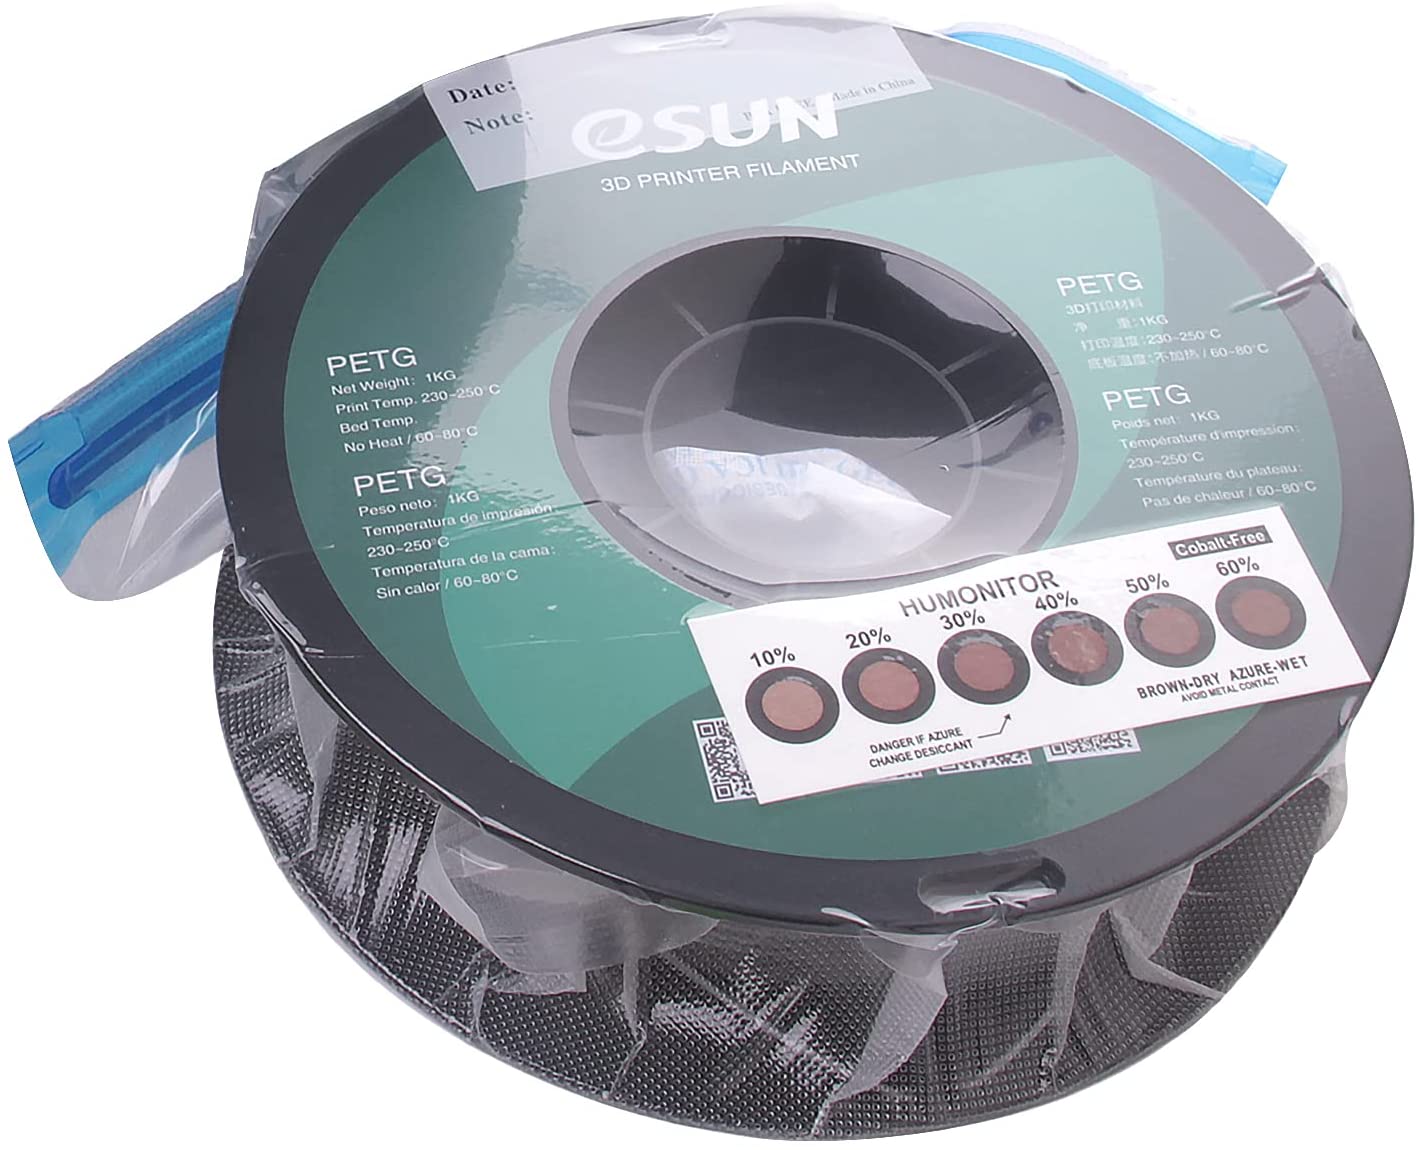 eSUN ePA (Nylon) Filament 1kg (2.2lb) Spool – INTSERVO 3D Printing Store